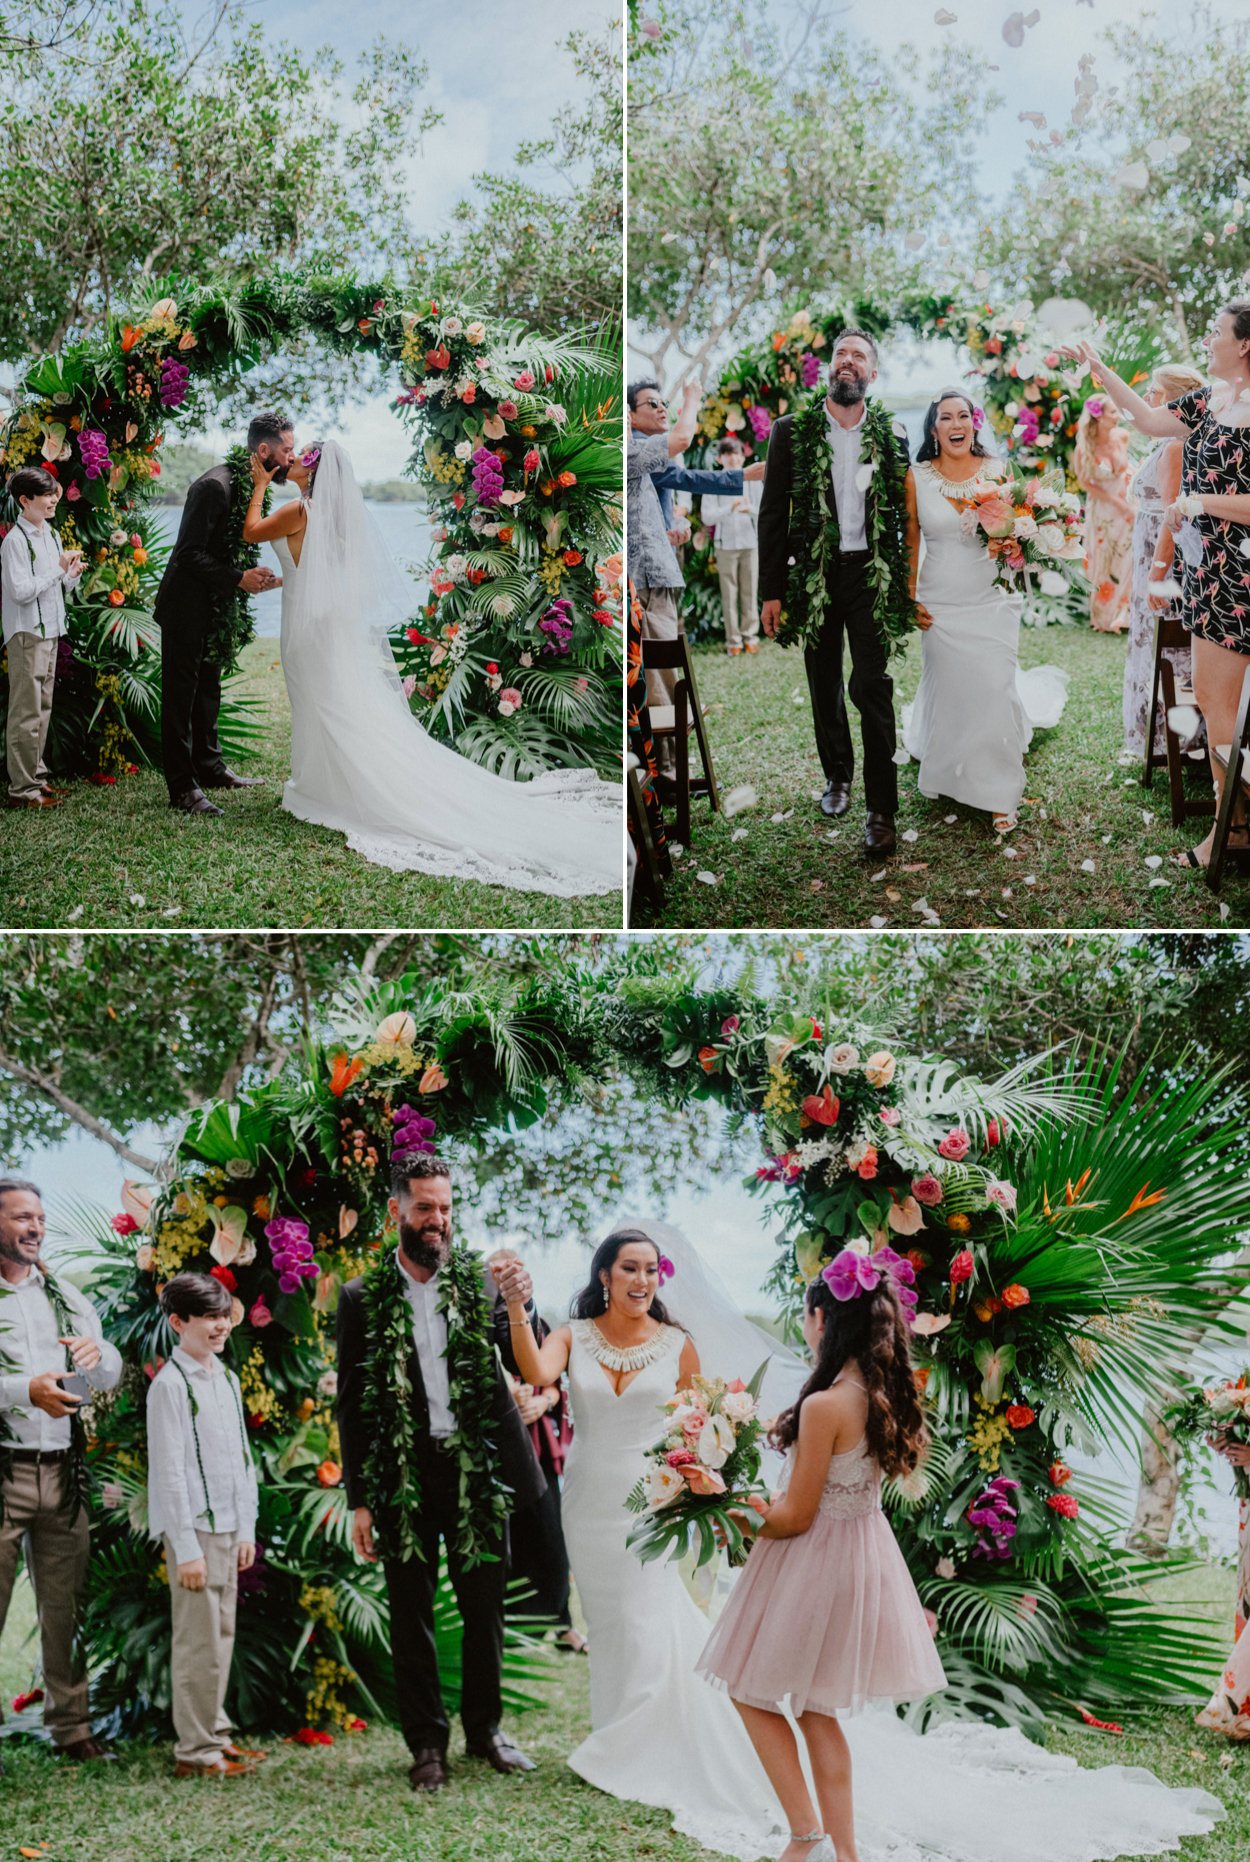 Moli'i fishpond Hawaii bride and groom wedding ceremony kiss